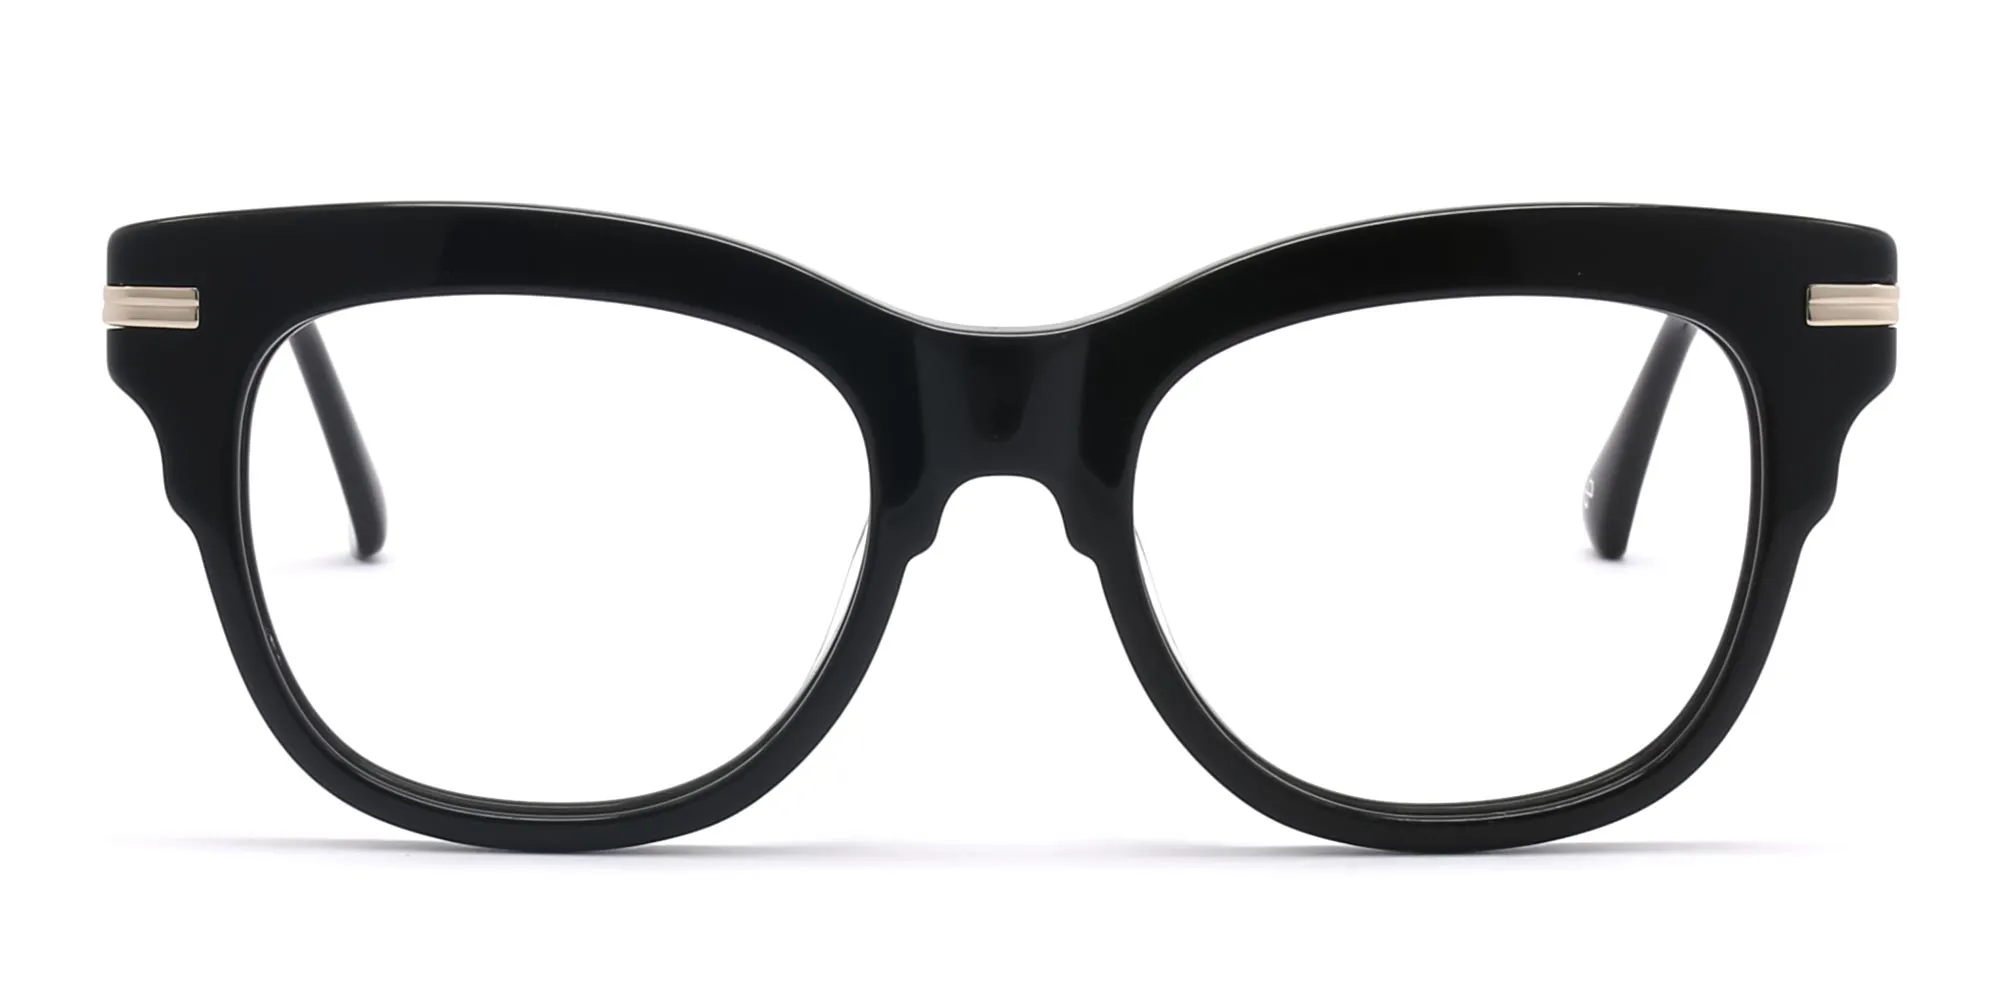 DEWSBURY 1 - Black Cat Eye Glasses Women | Specscart.®